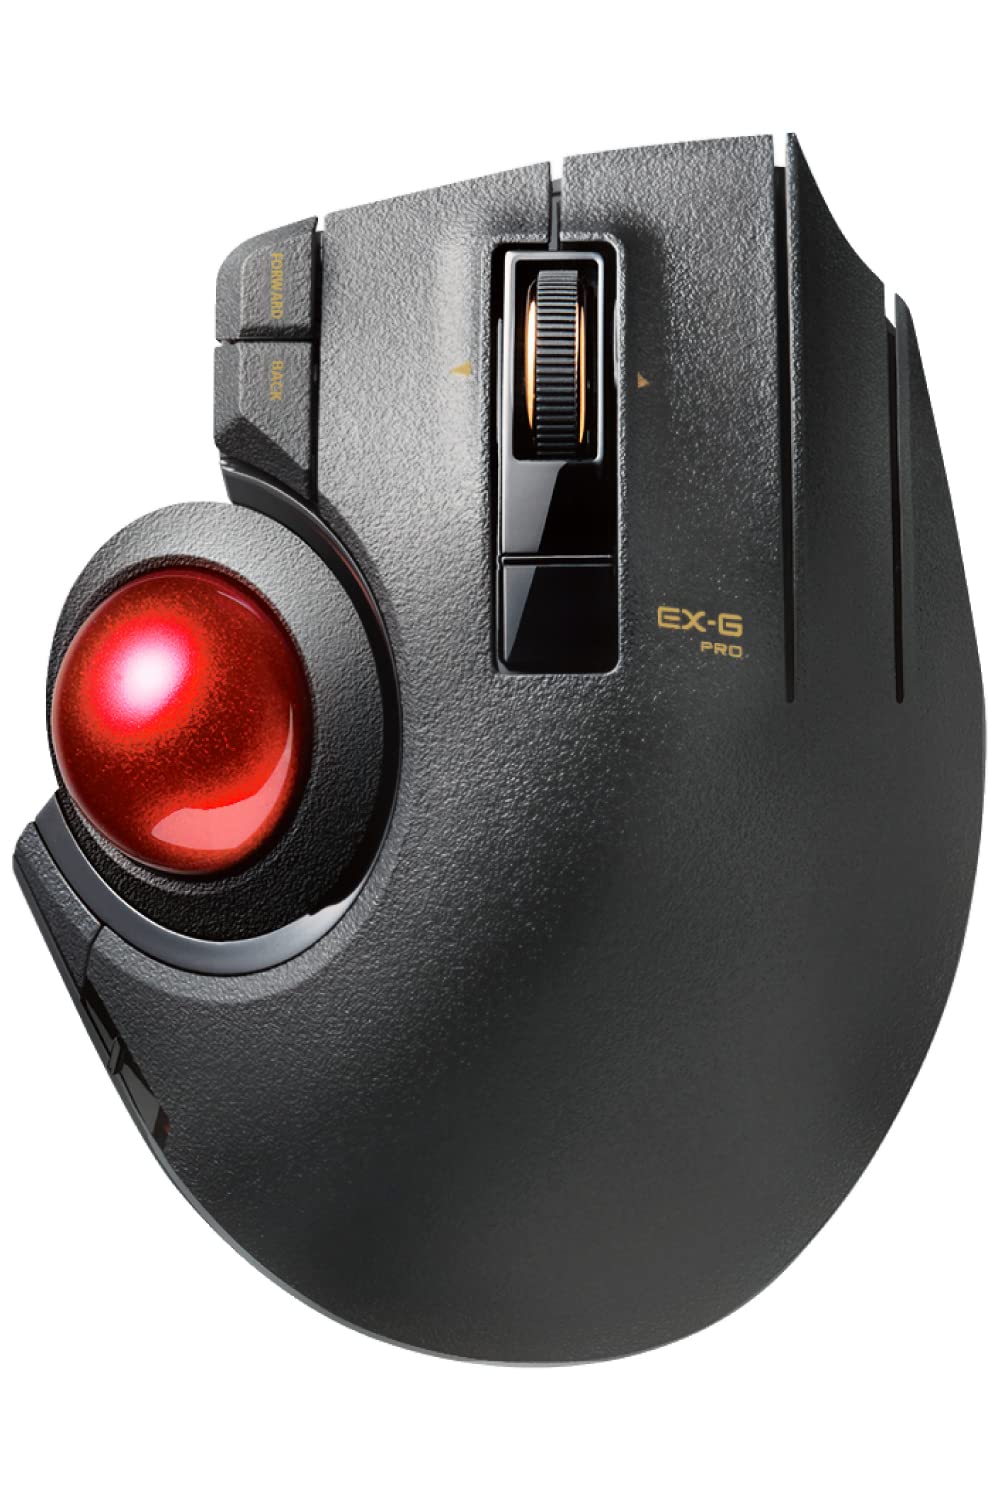 EX-G Pro Trackball Mouse, Button Function, Ergonomic Design